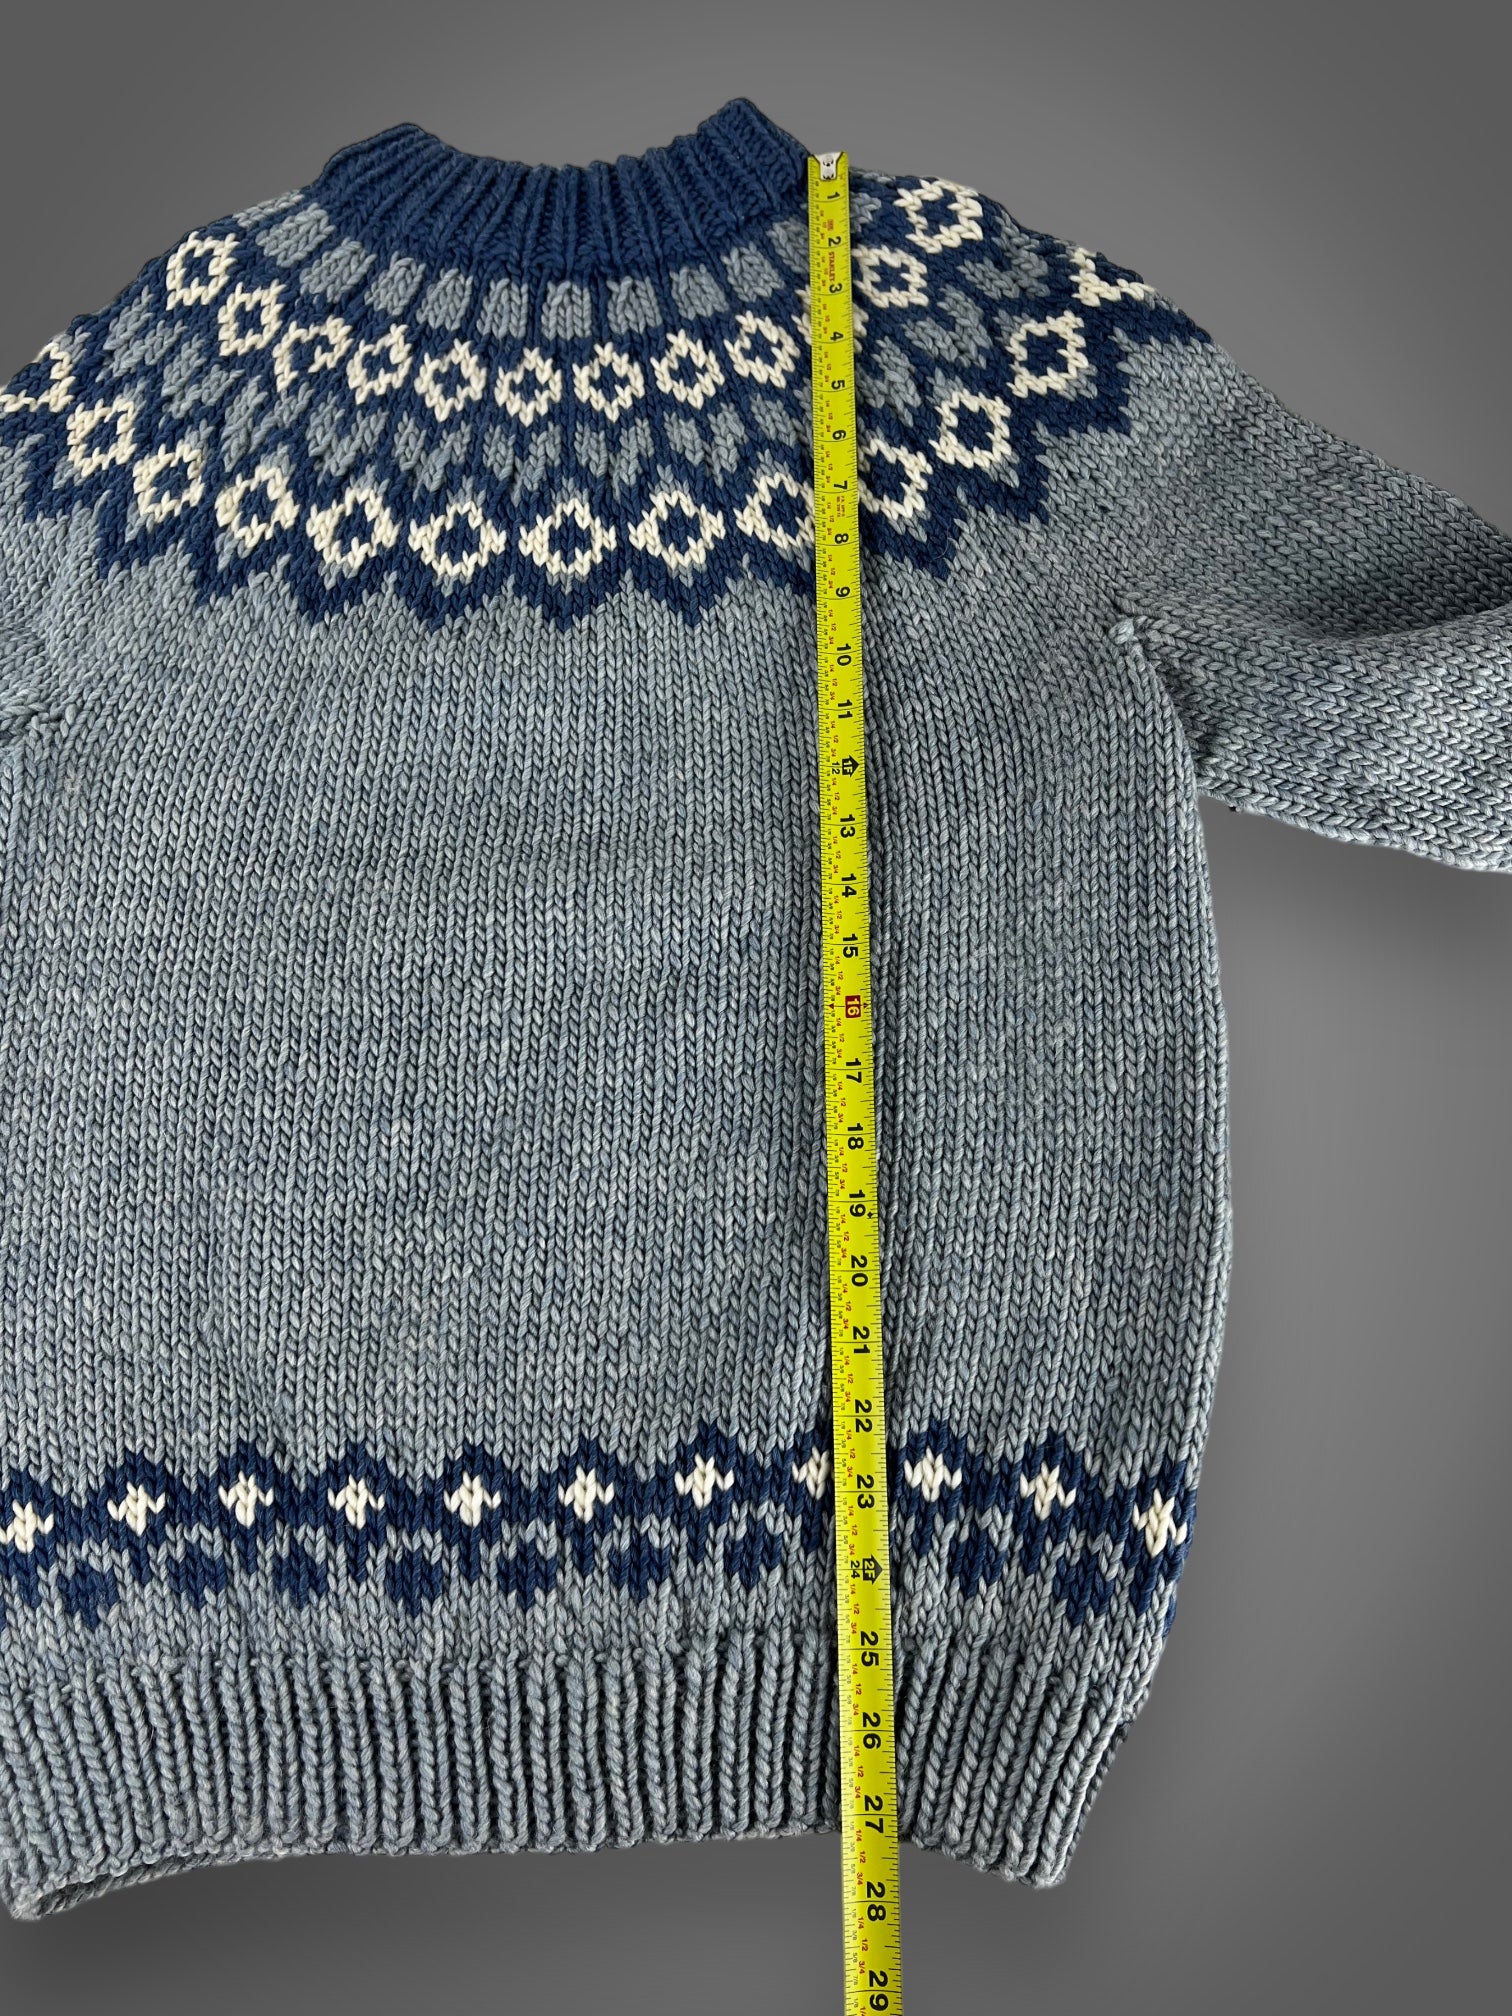 Heavyweight hand knit Nordic wool sweater fits M/L